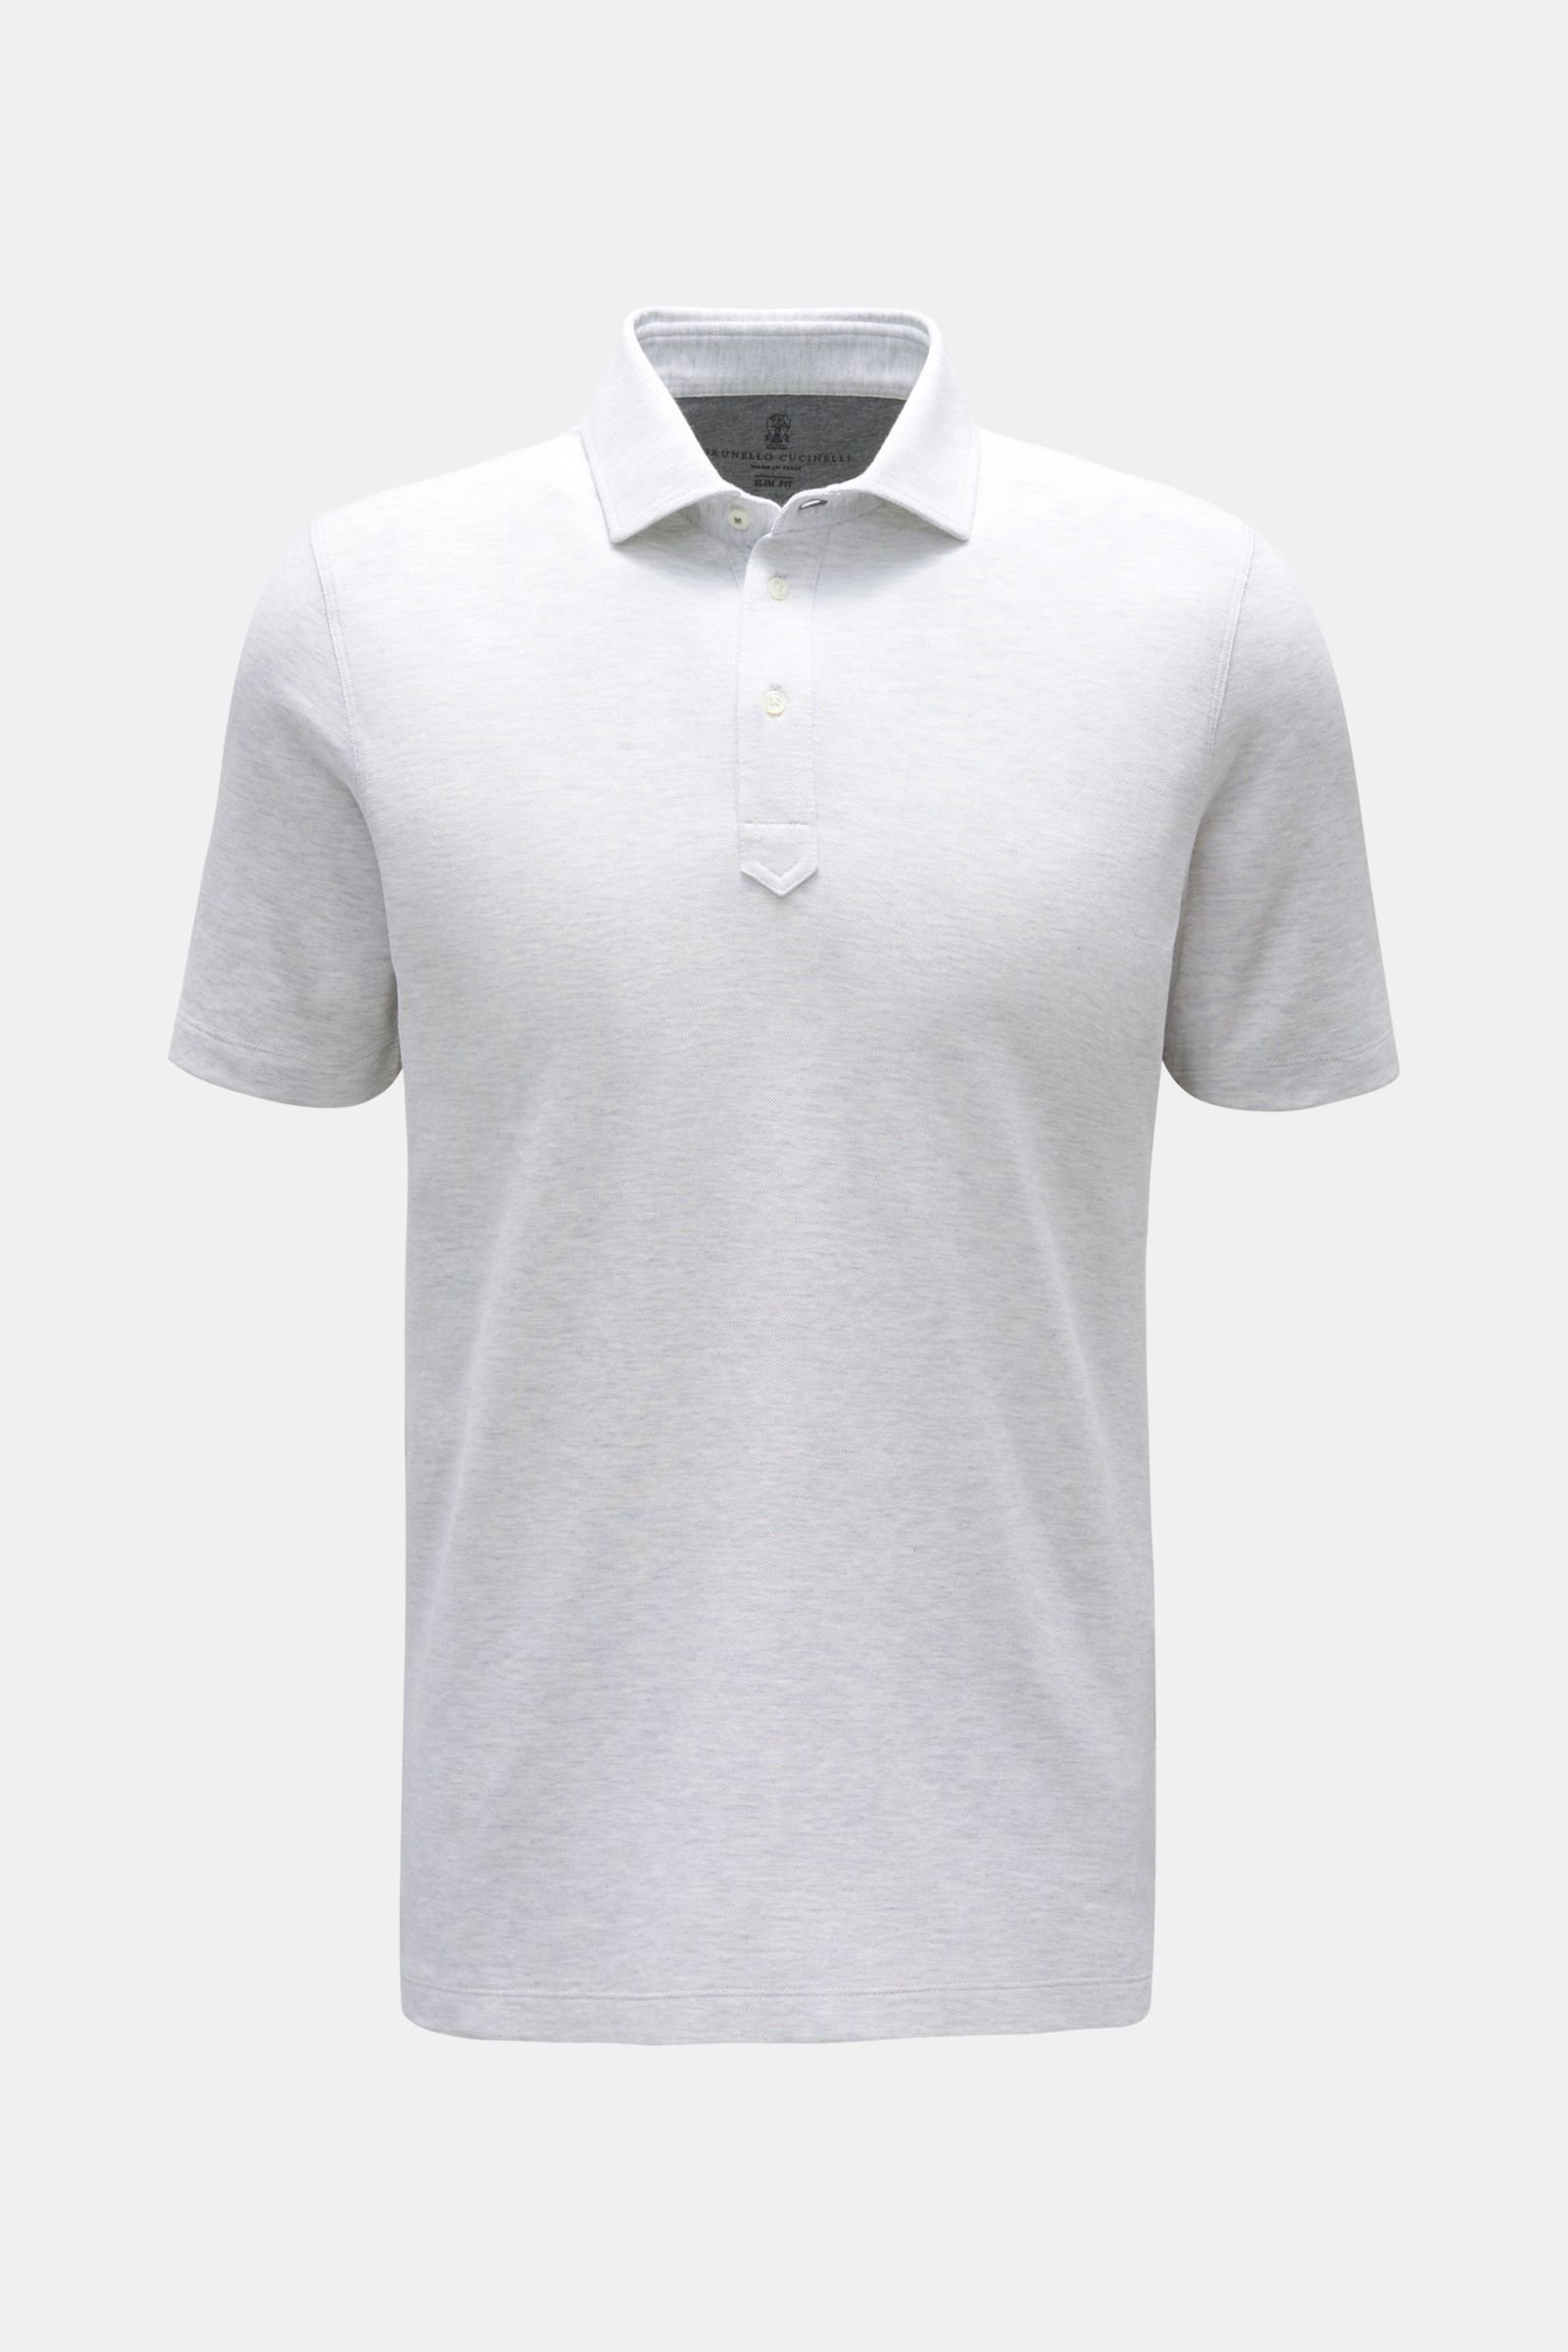 Polo shirt light grey 